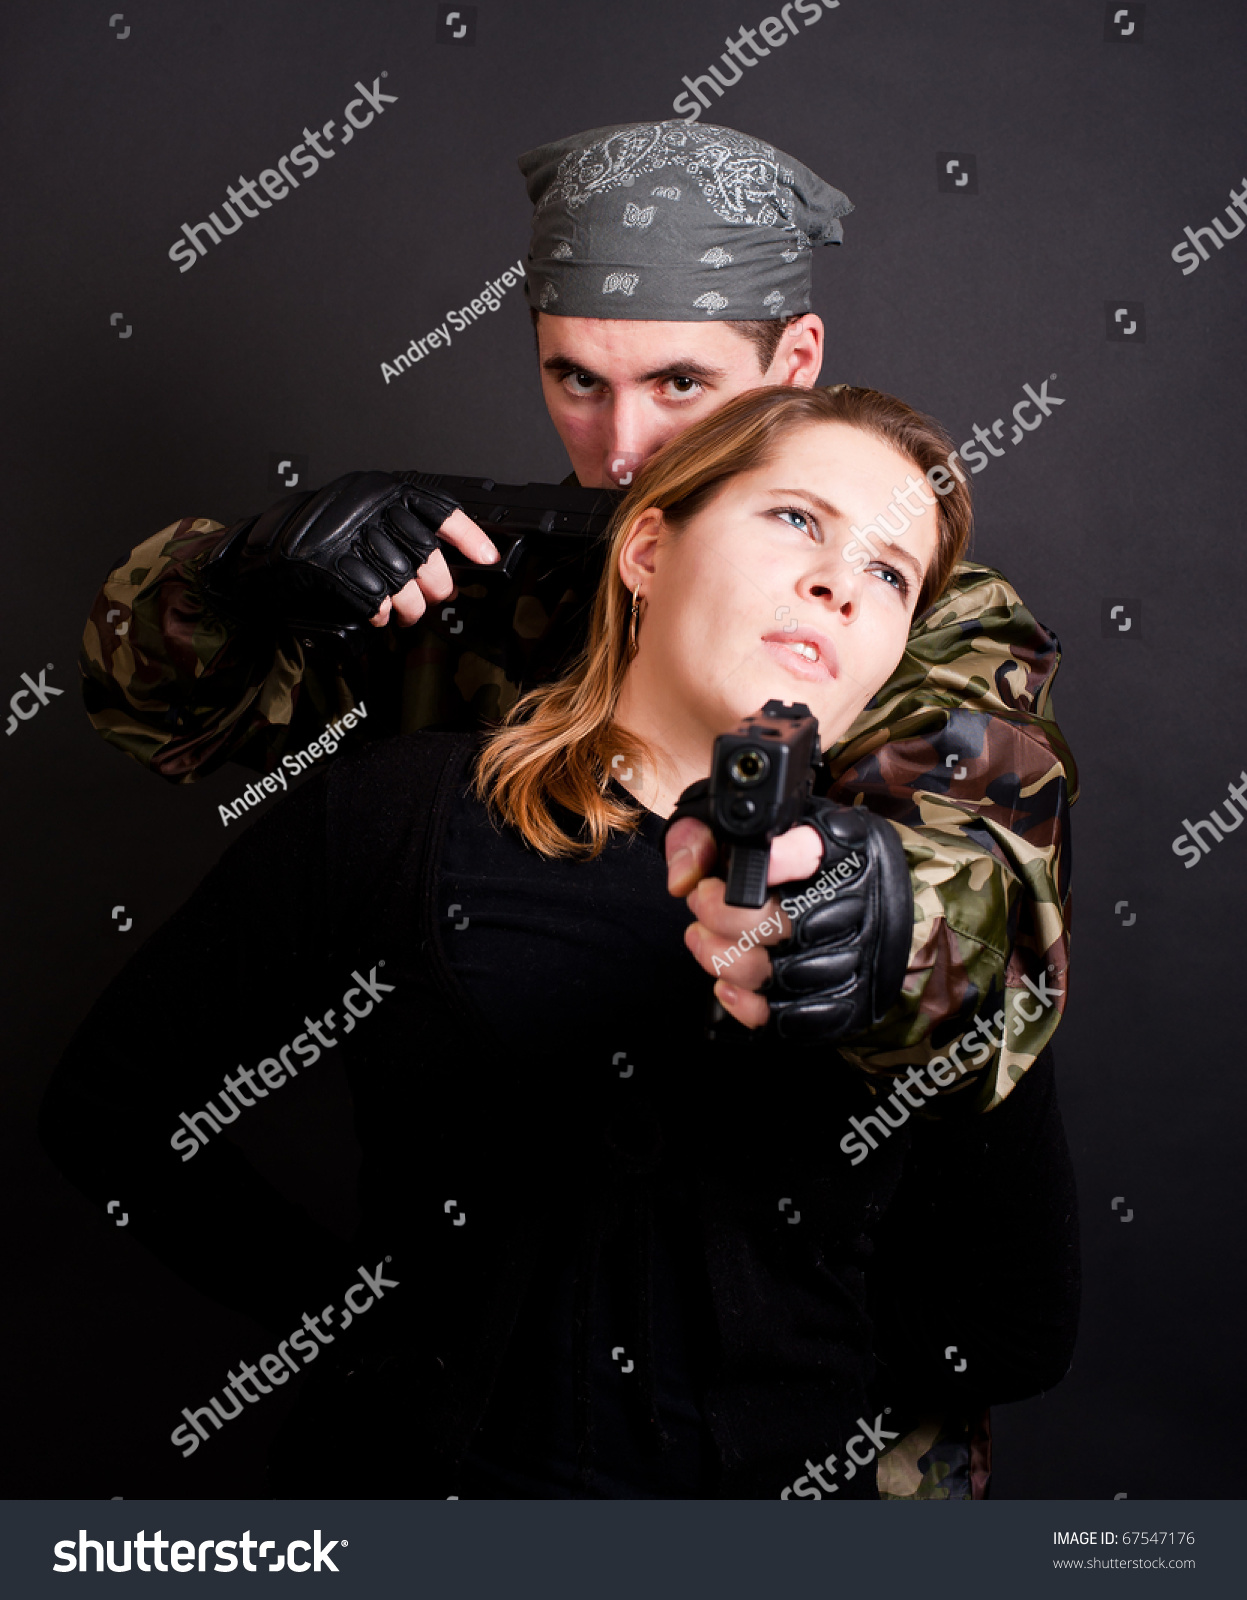 stock-photo-terrorist-and-hostage-675471